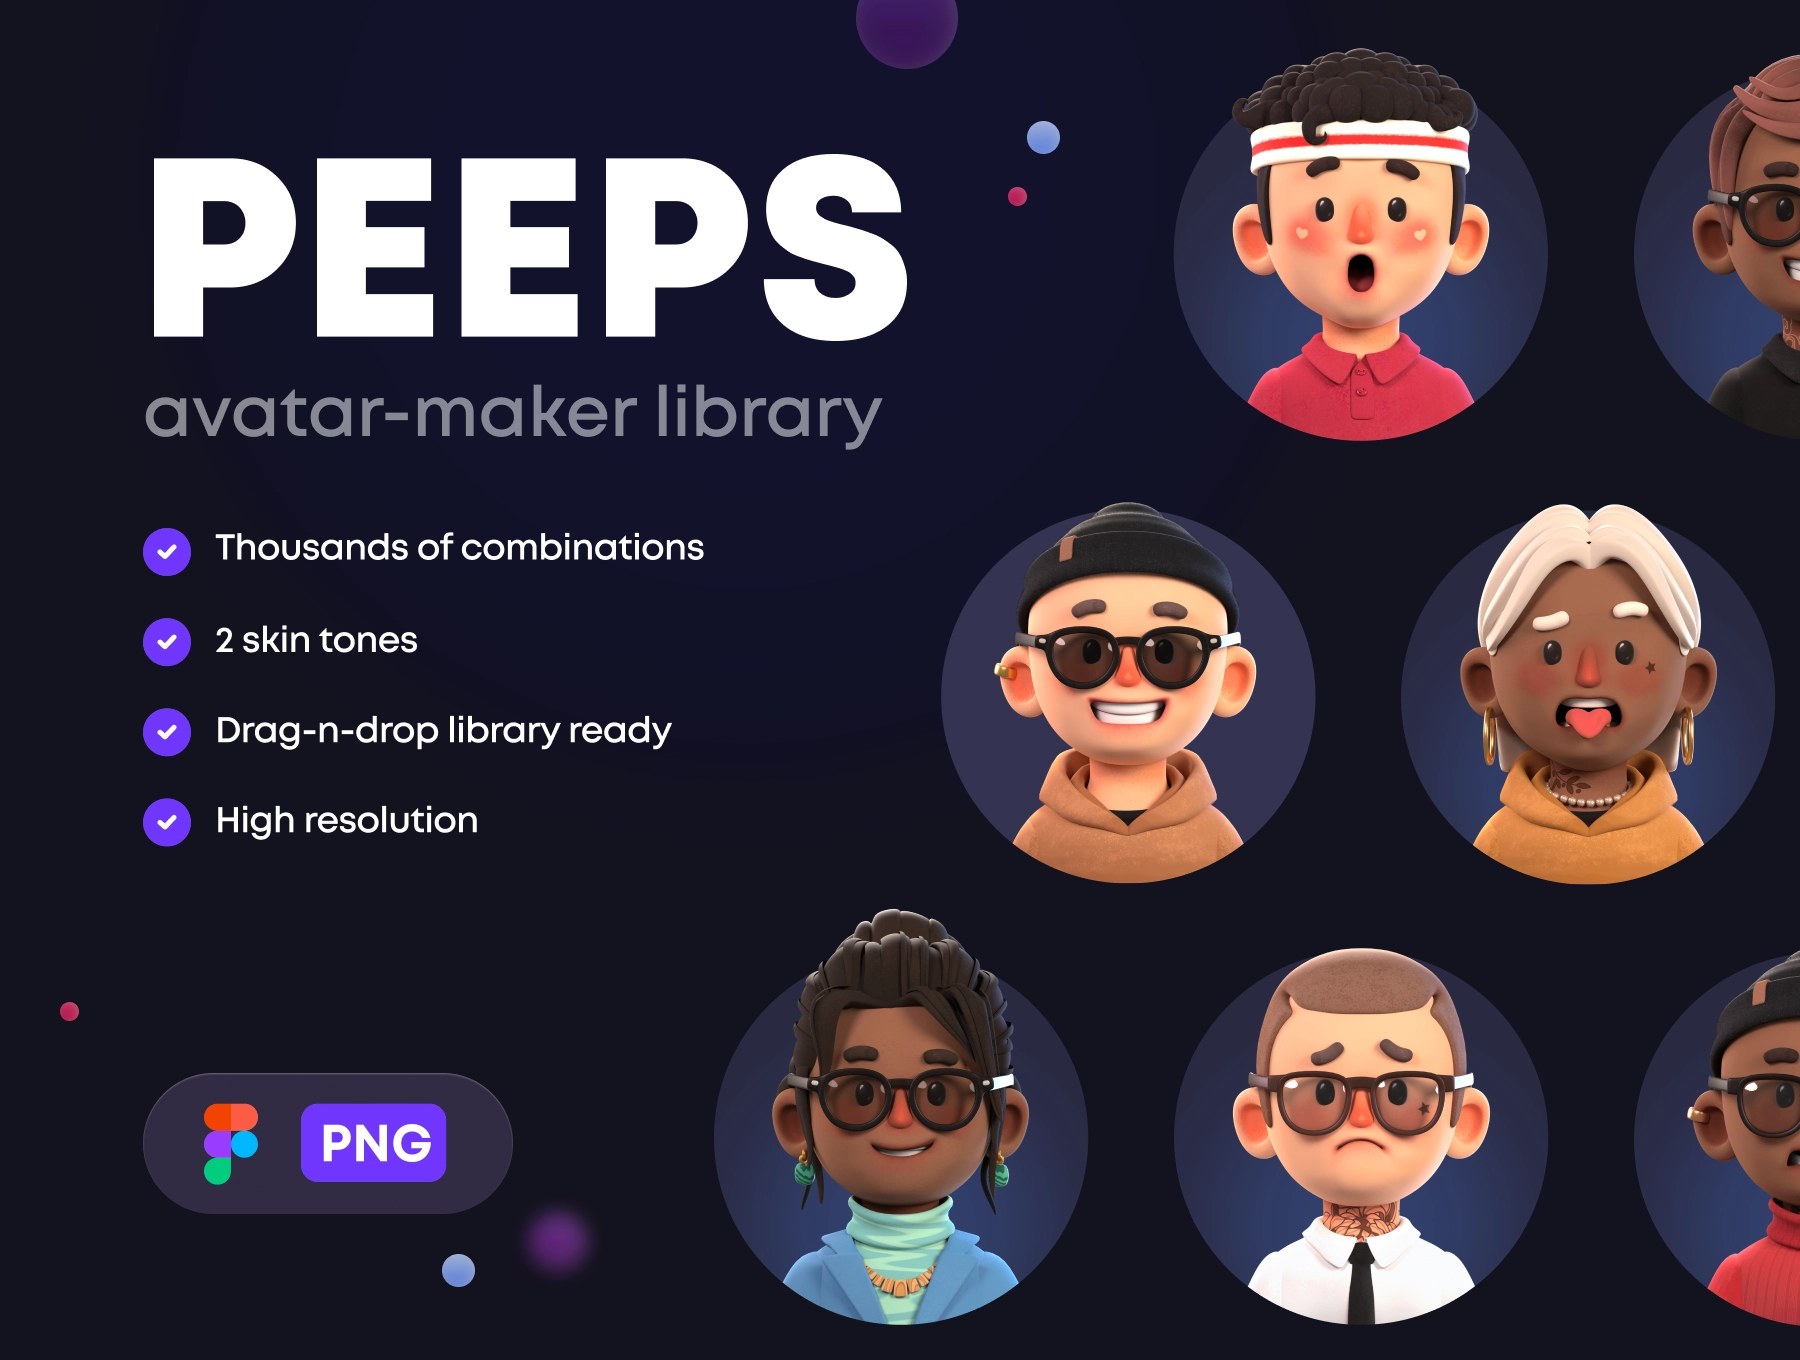 VIP] PEEPS 3D Avatar-Maker Library - Designers Community